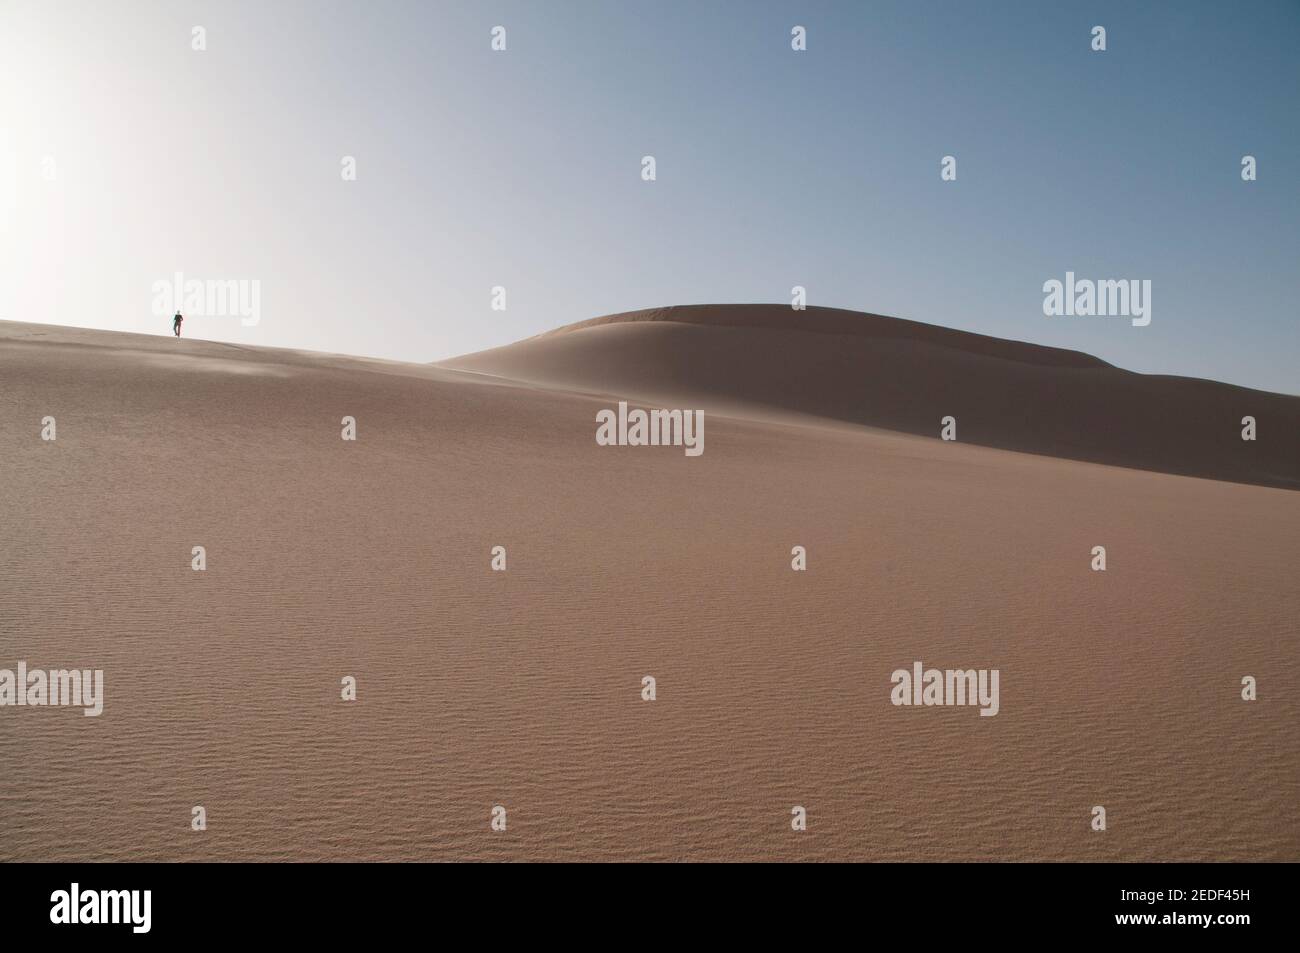 A man walking on a whaleback sand dune in the Great Sand Sea, in the Western Desert region of the Sahara Desert, Egypt. Stock Photo